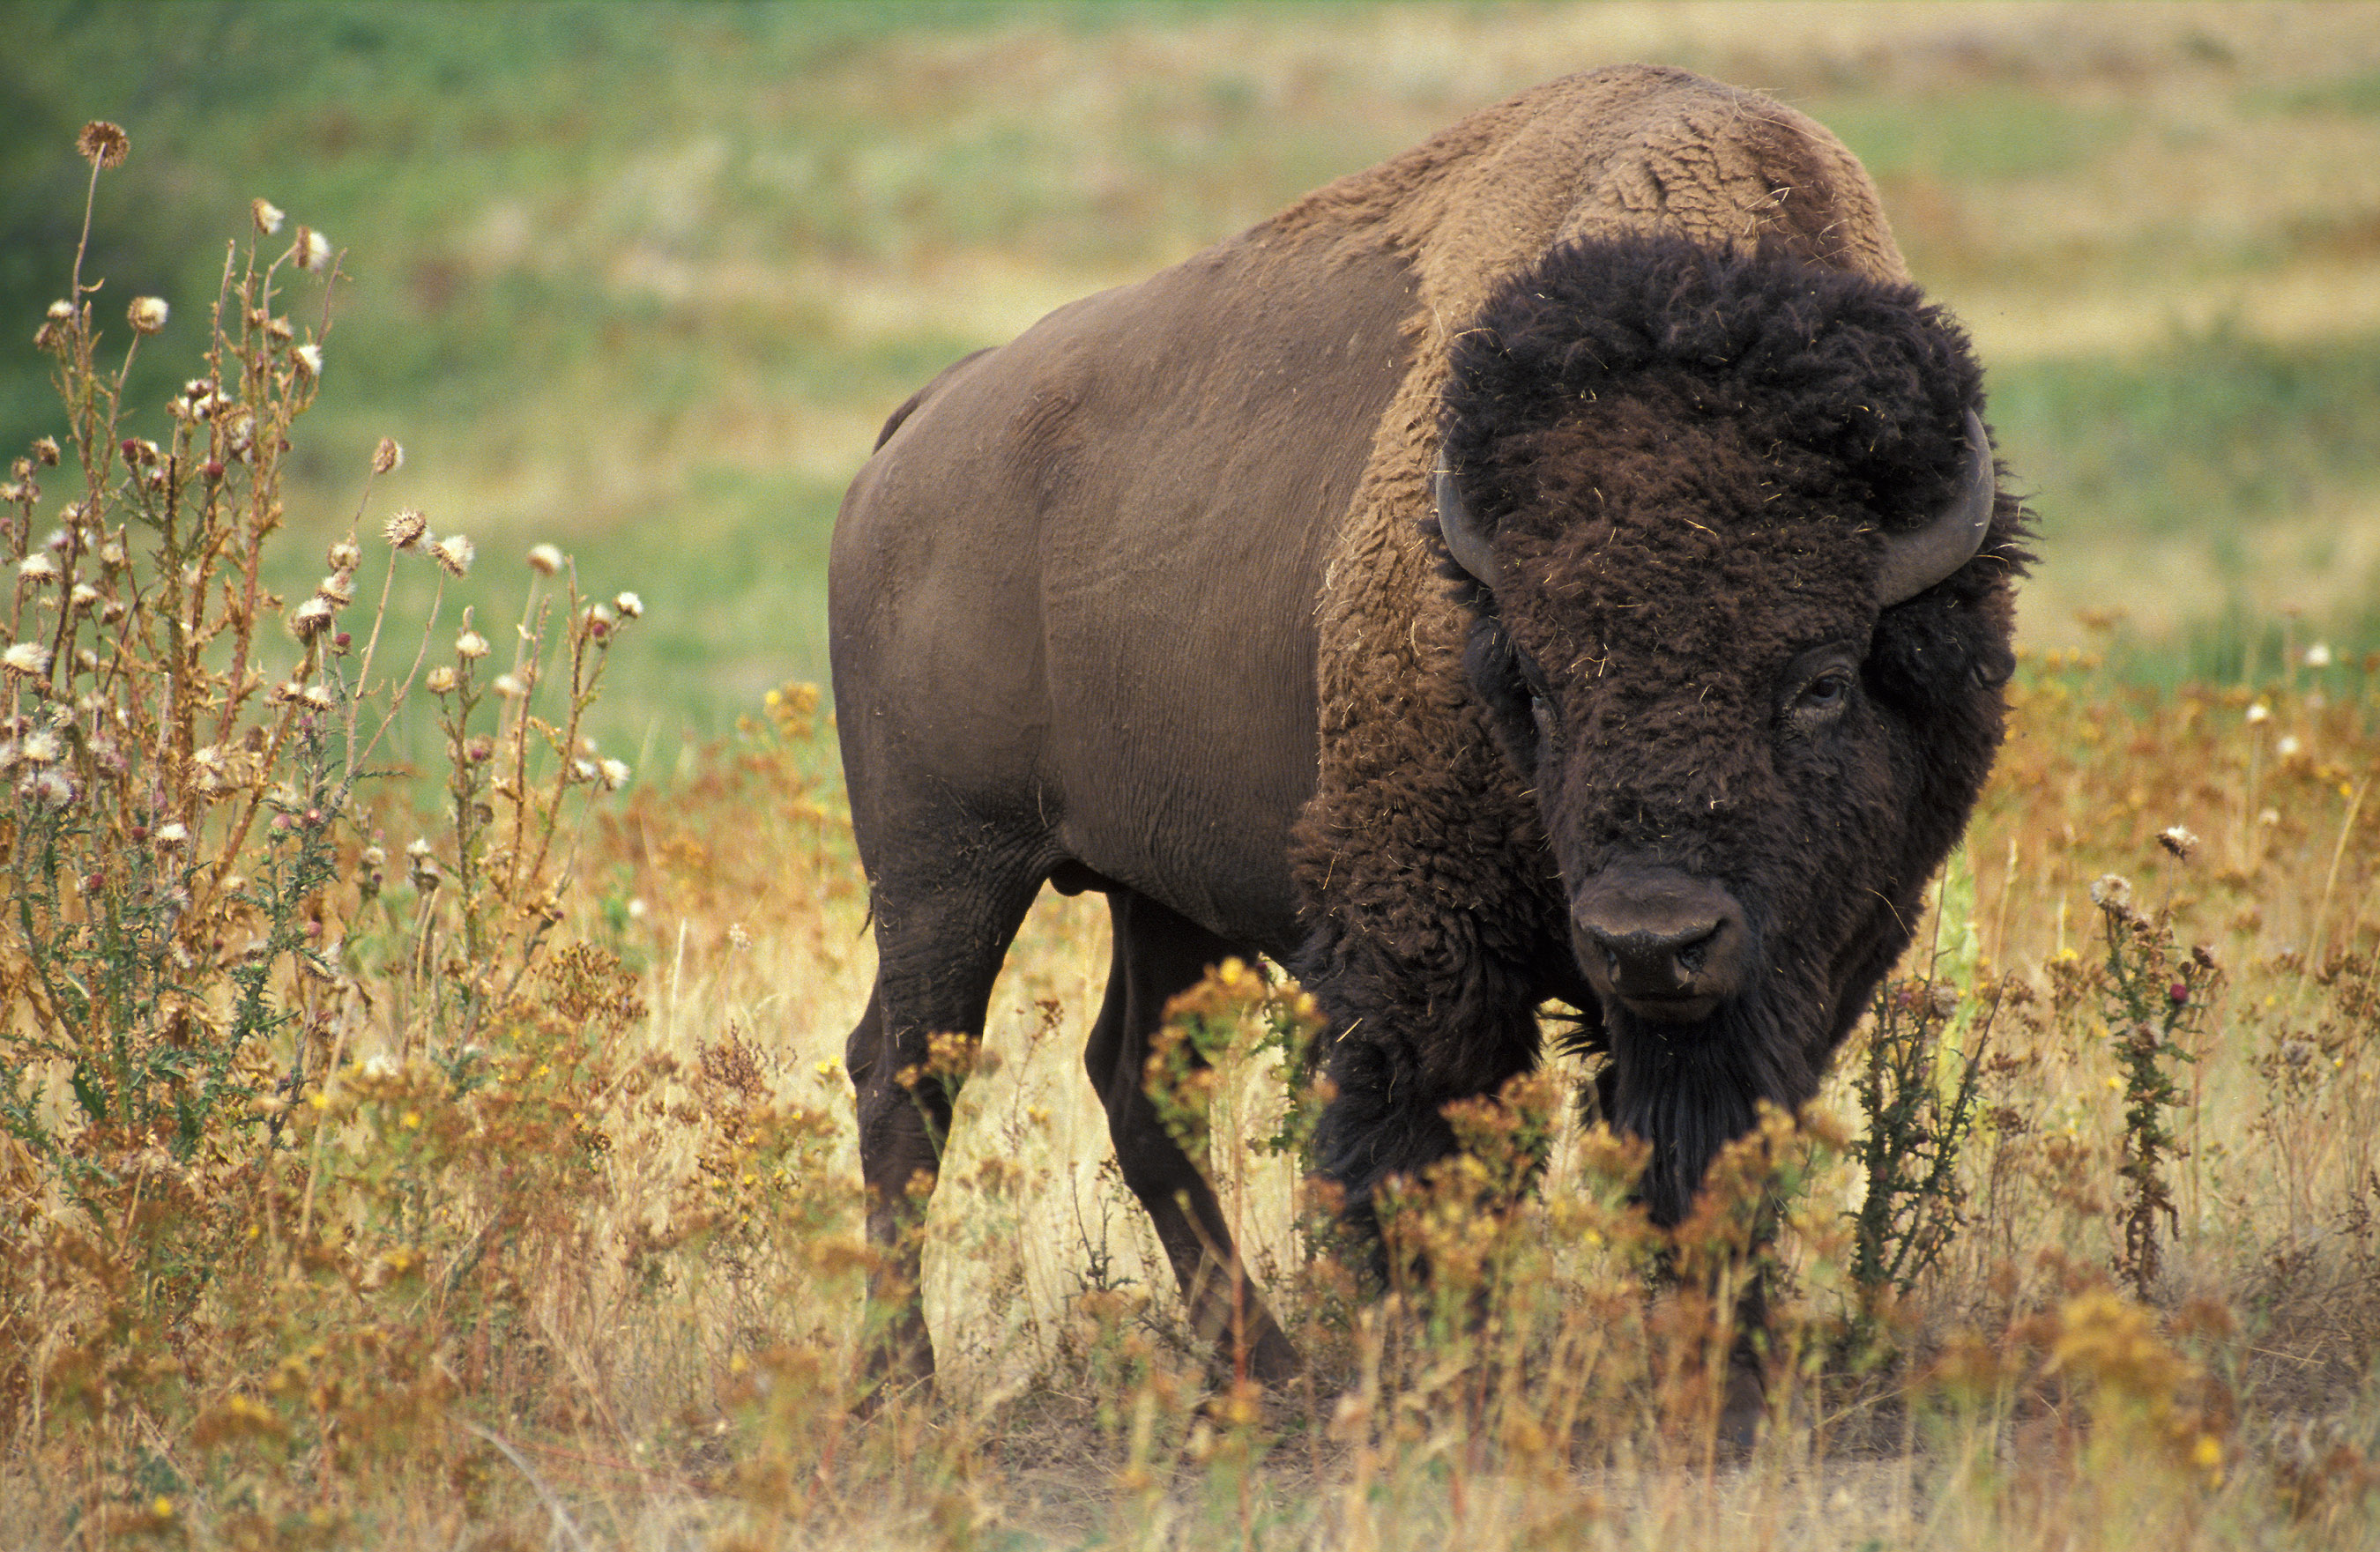 American bison - Wikipedia